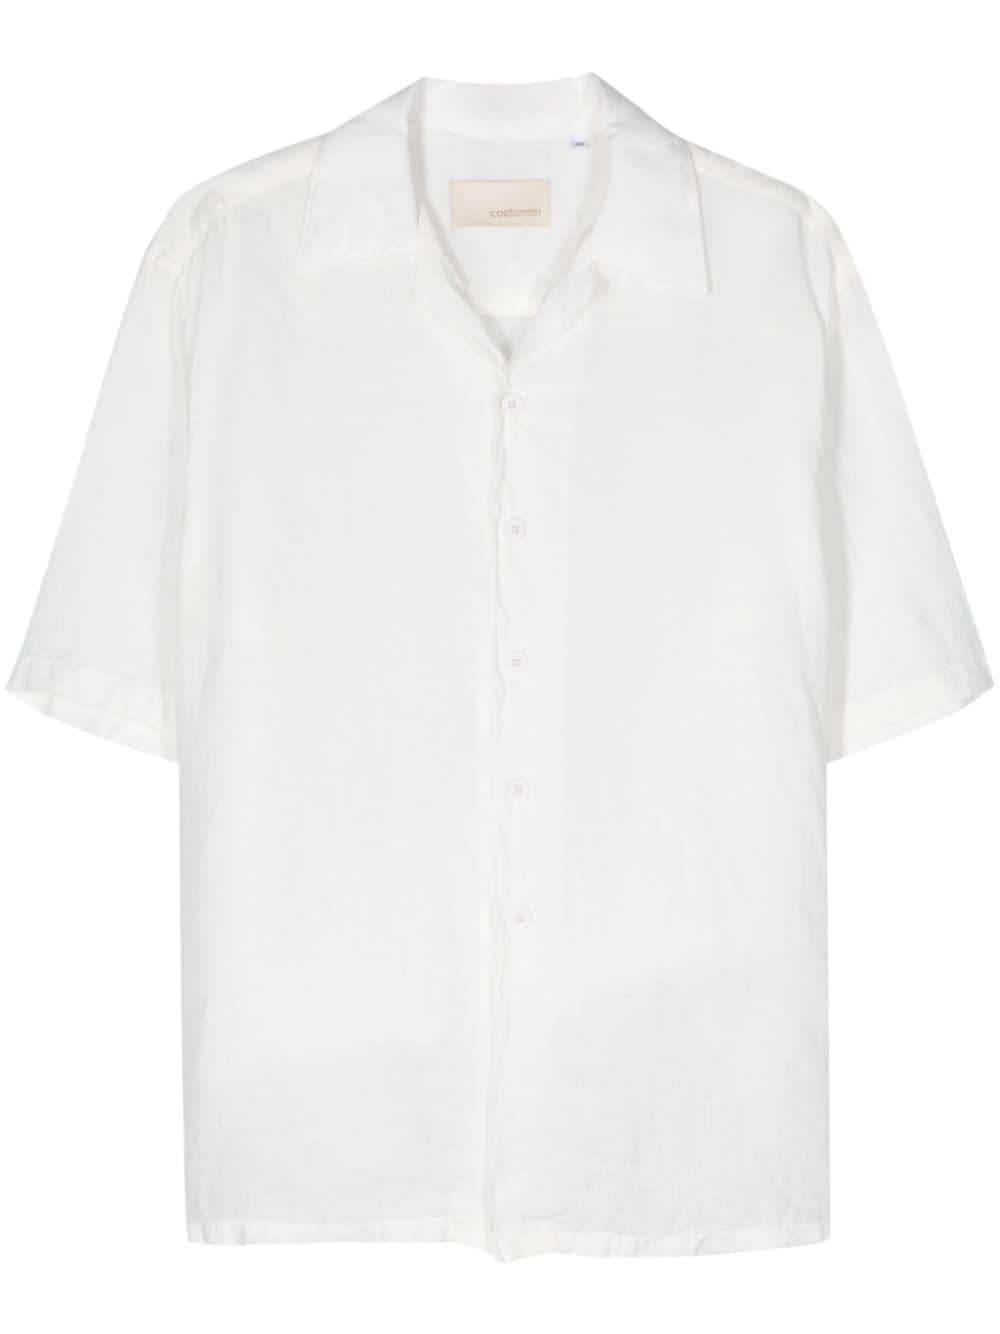 Costumein Robin linen shirt - Bianco